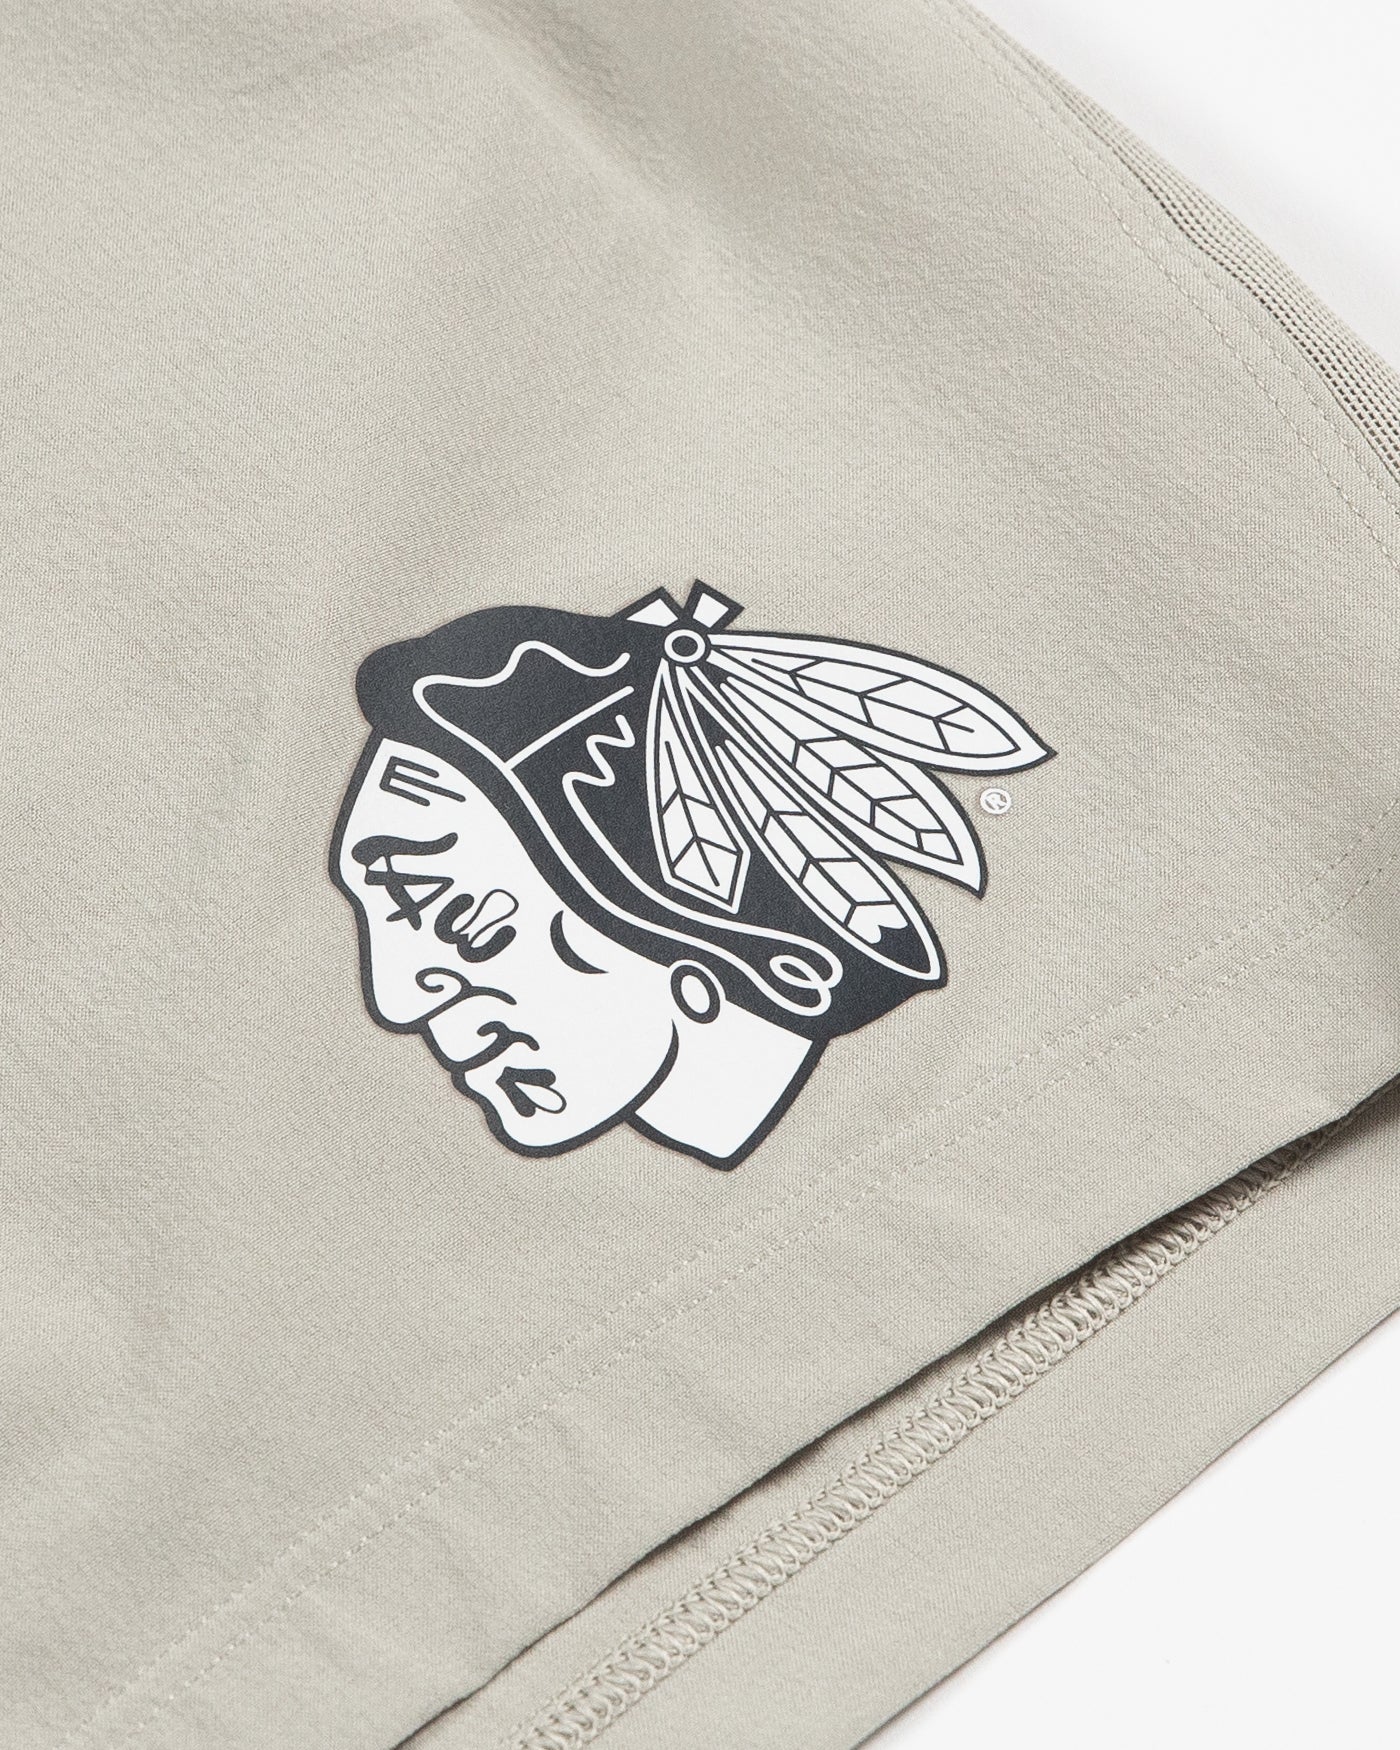 raw linen colored lululemon athletic shorts with tonal Chicago Blackhawks logo on left side - detail lay flat